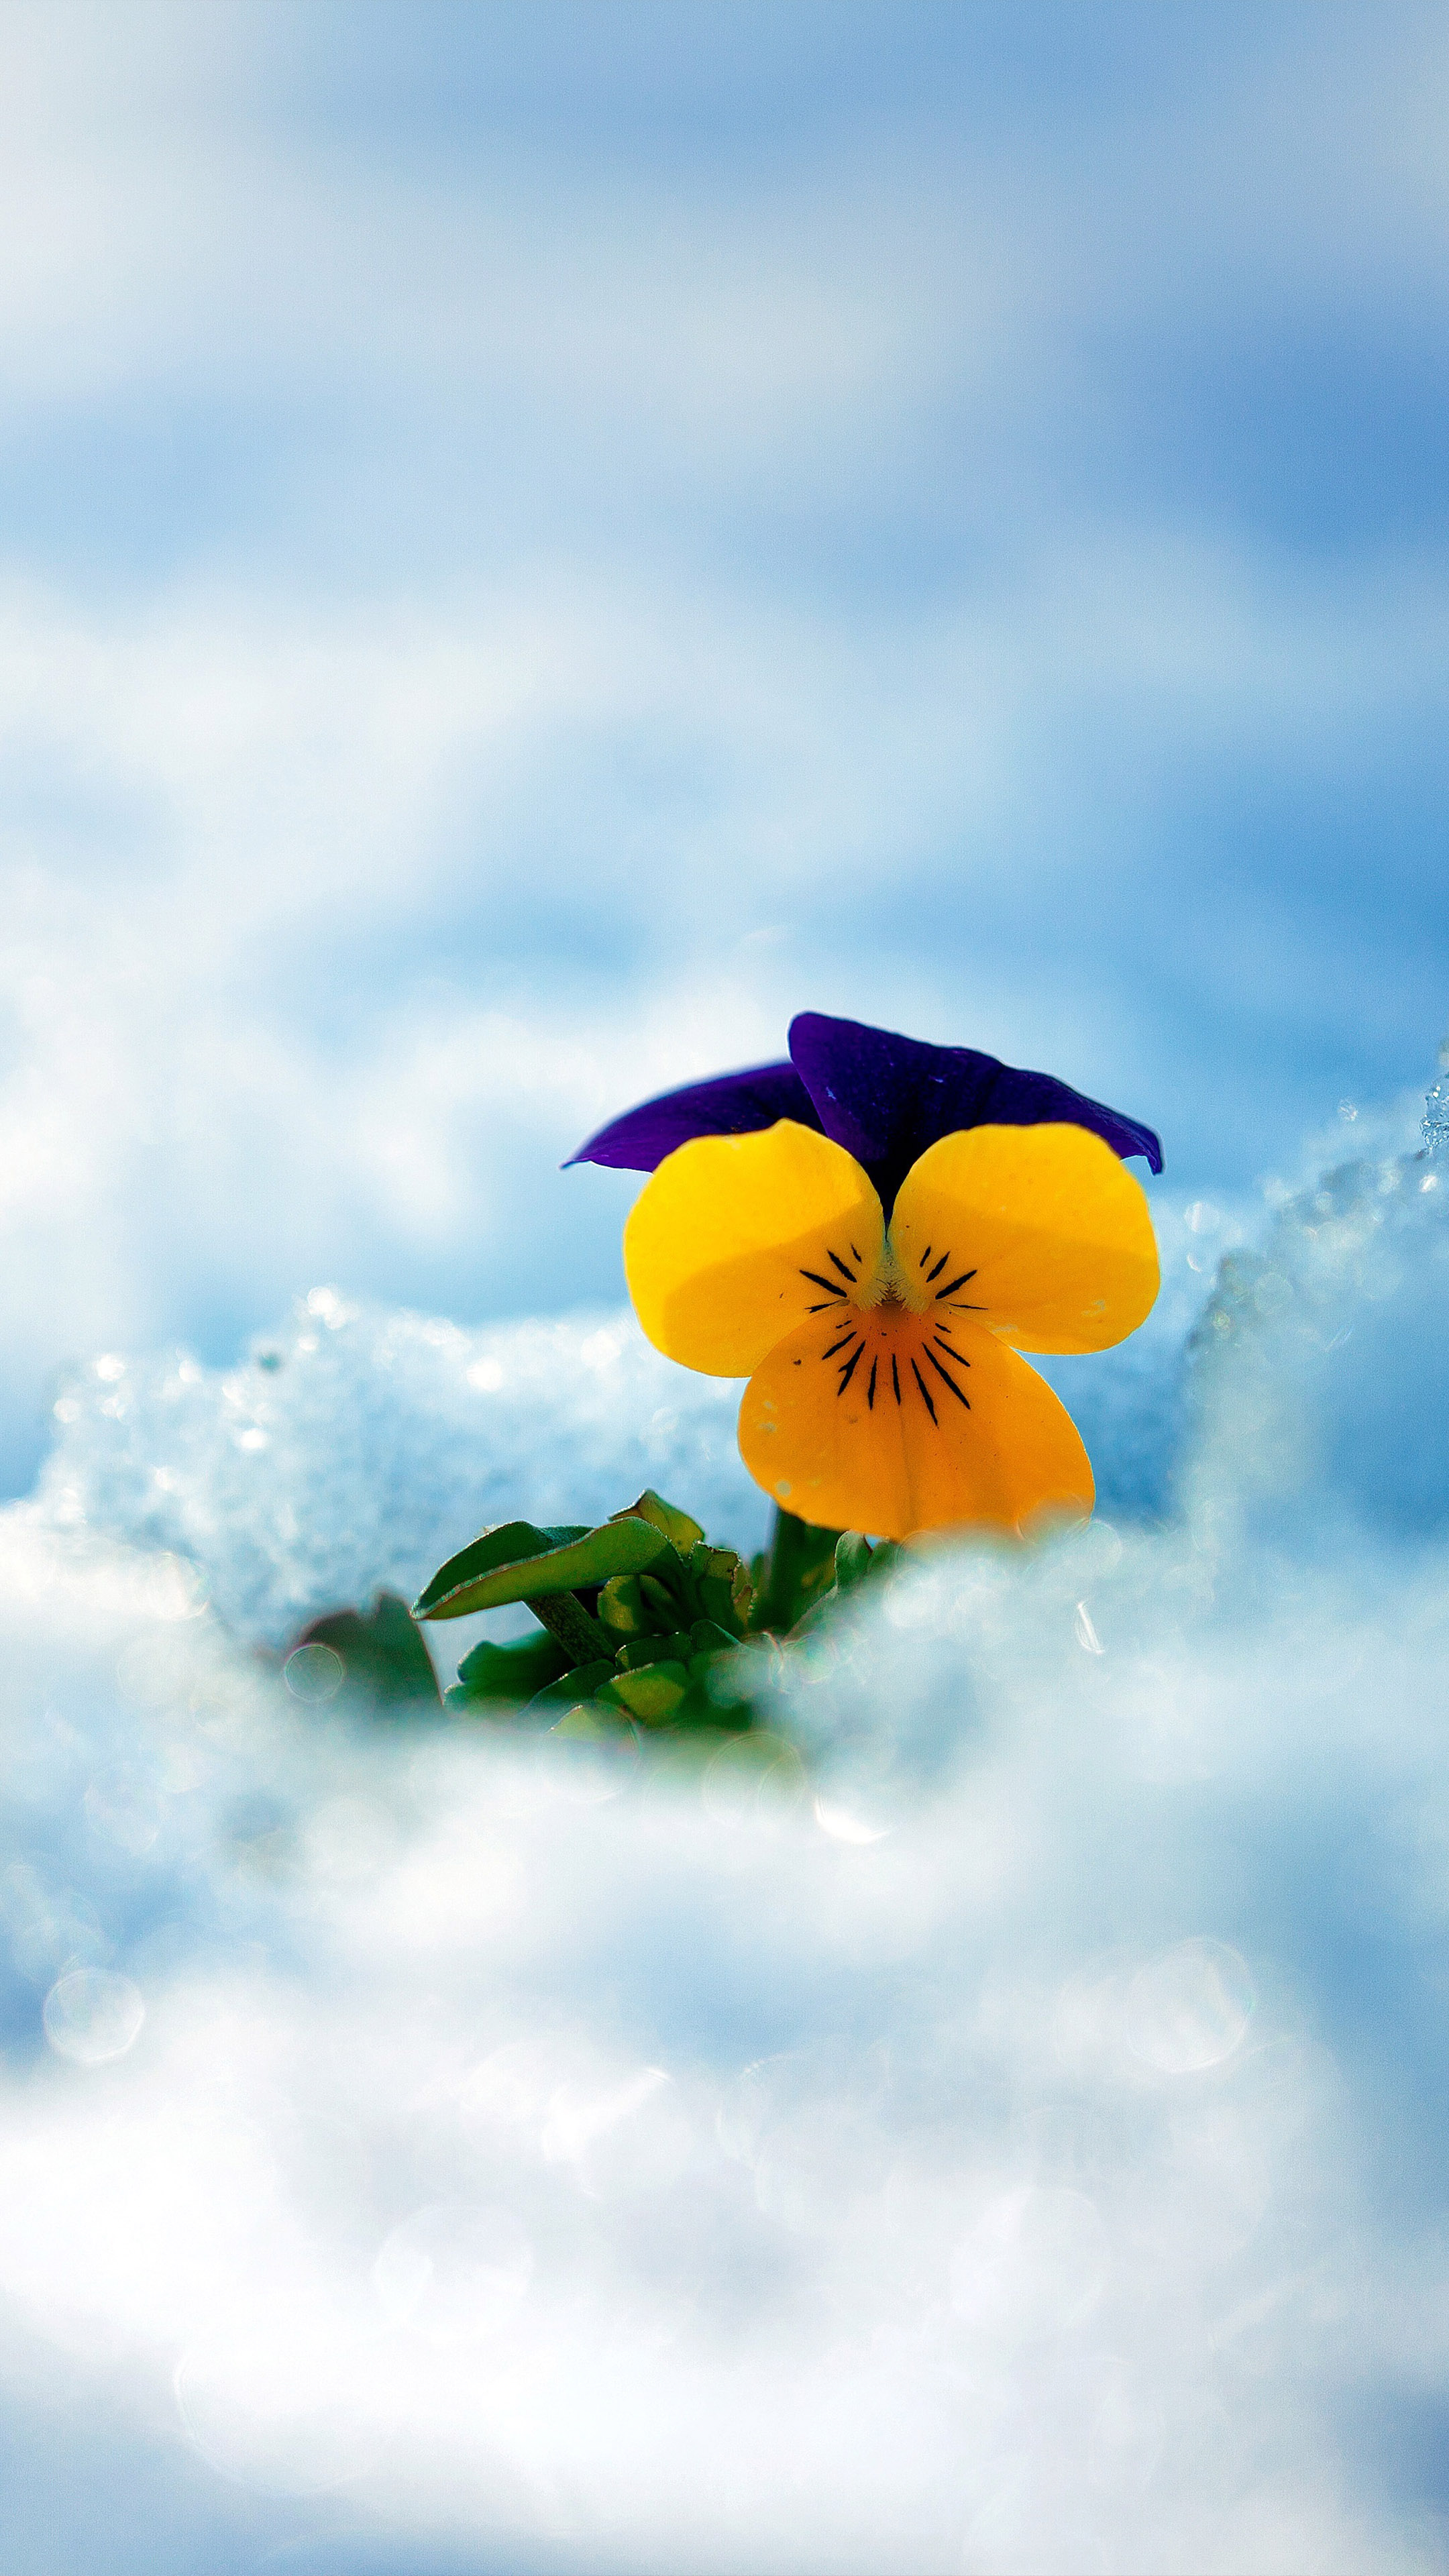 Wallpaper Blue flower primrose snow winter 1920x1200 HD Picture Image